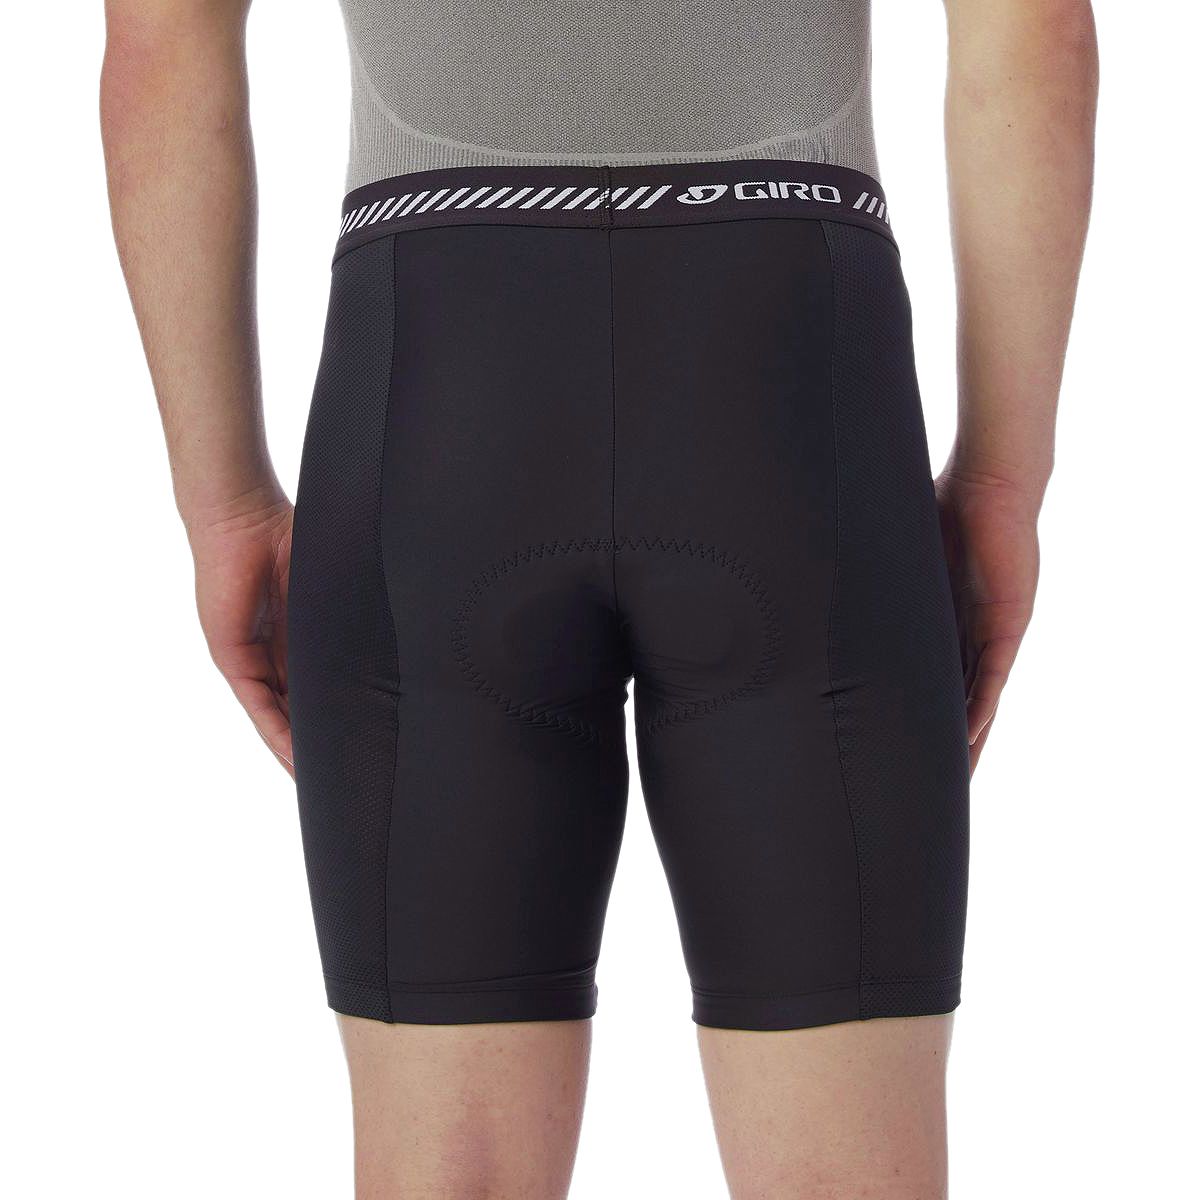 Men's Padded Cycling Liner Shorts